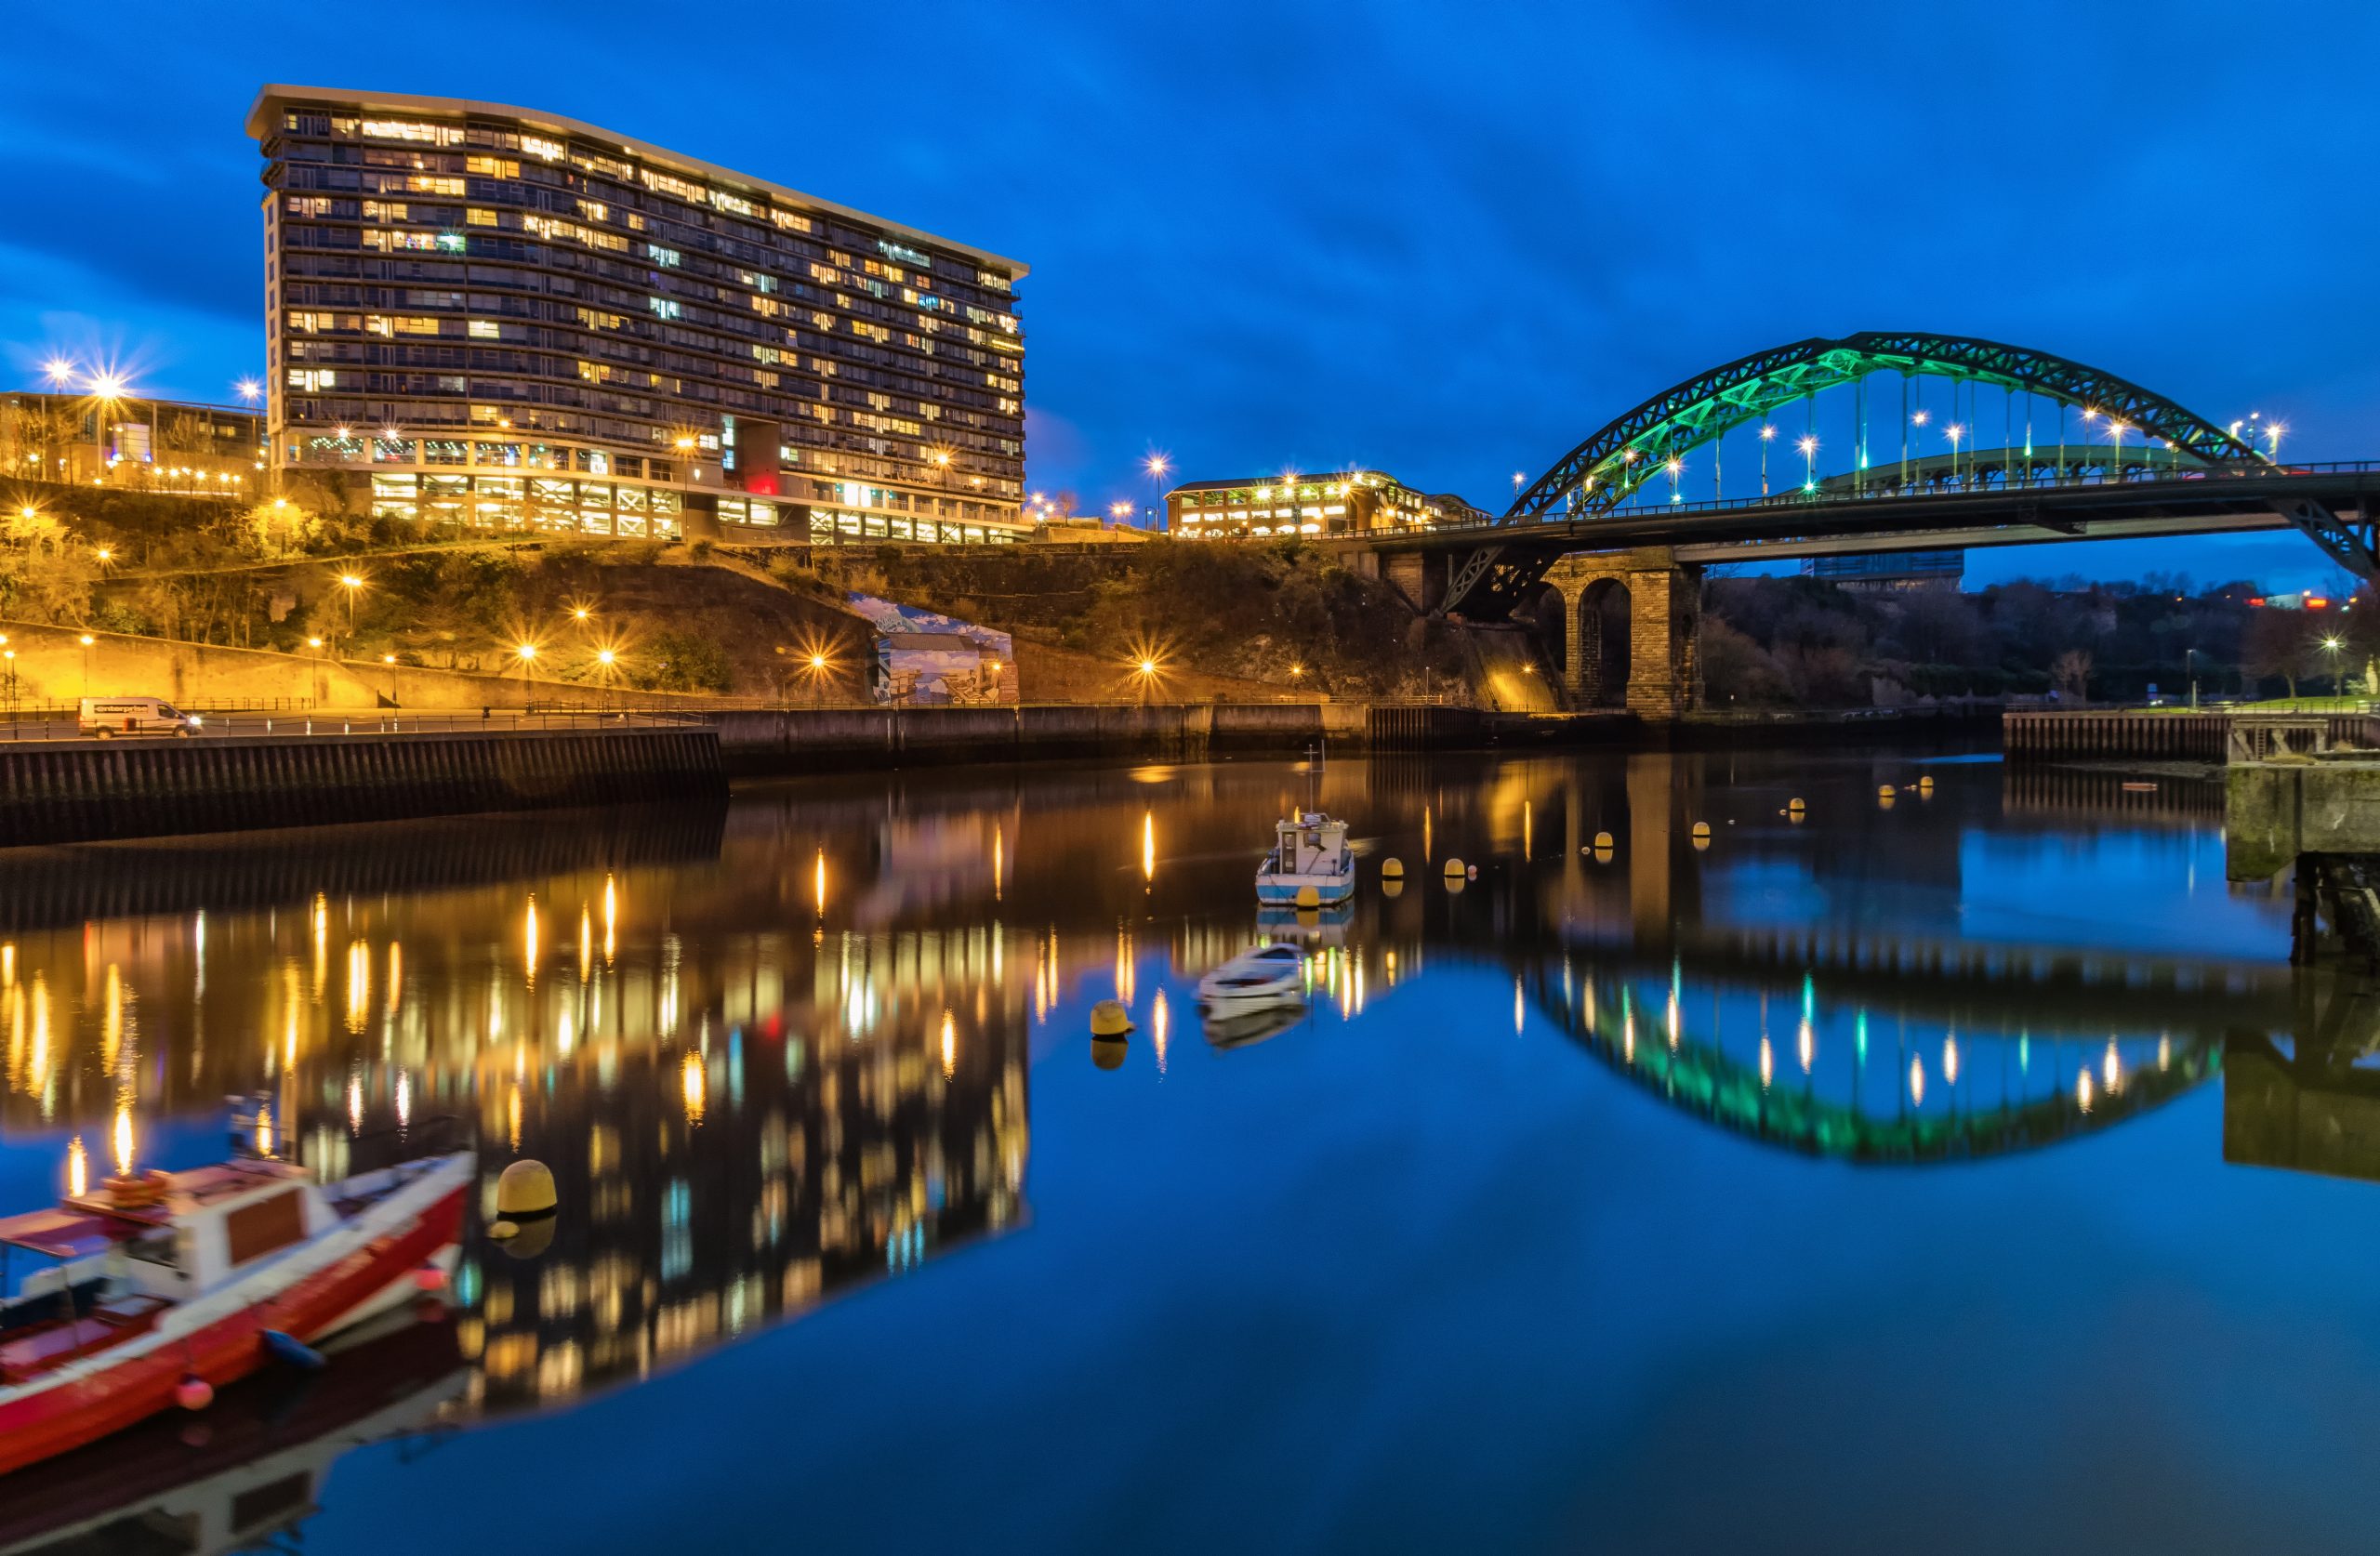 How Has Sunderland Developed Into A Smart City?